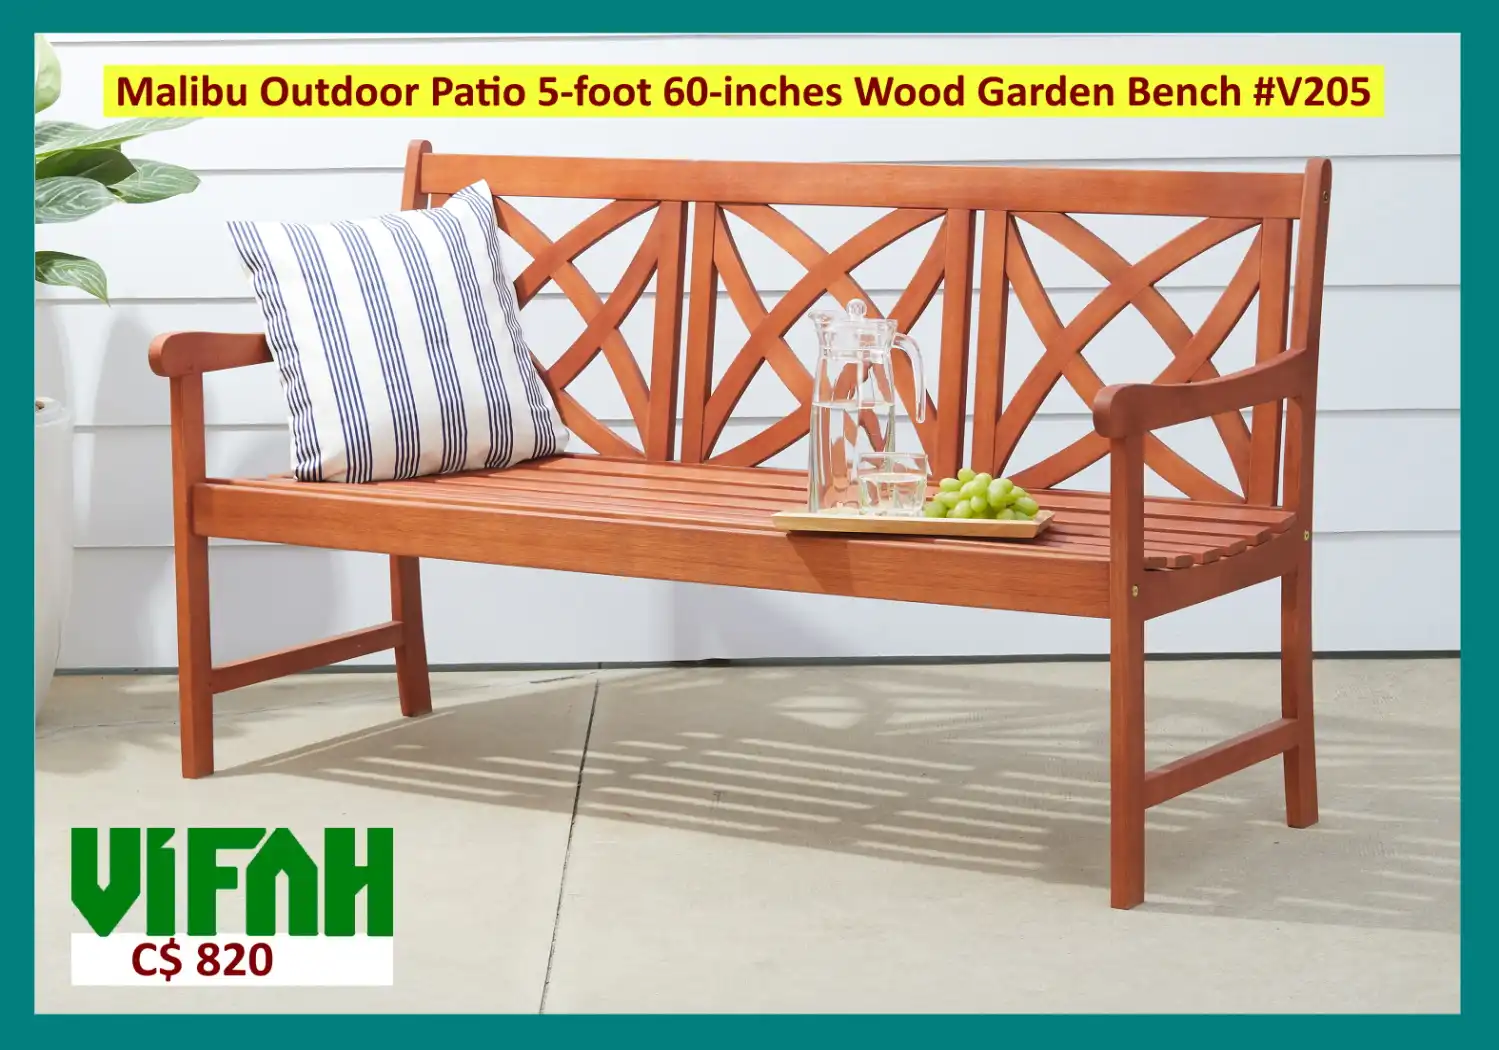 MALIBU Outdoor #V205 Patio 5-foot 60-inches Wood Garden Bench